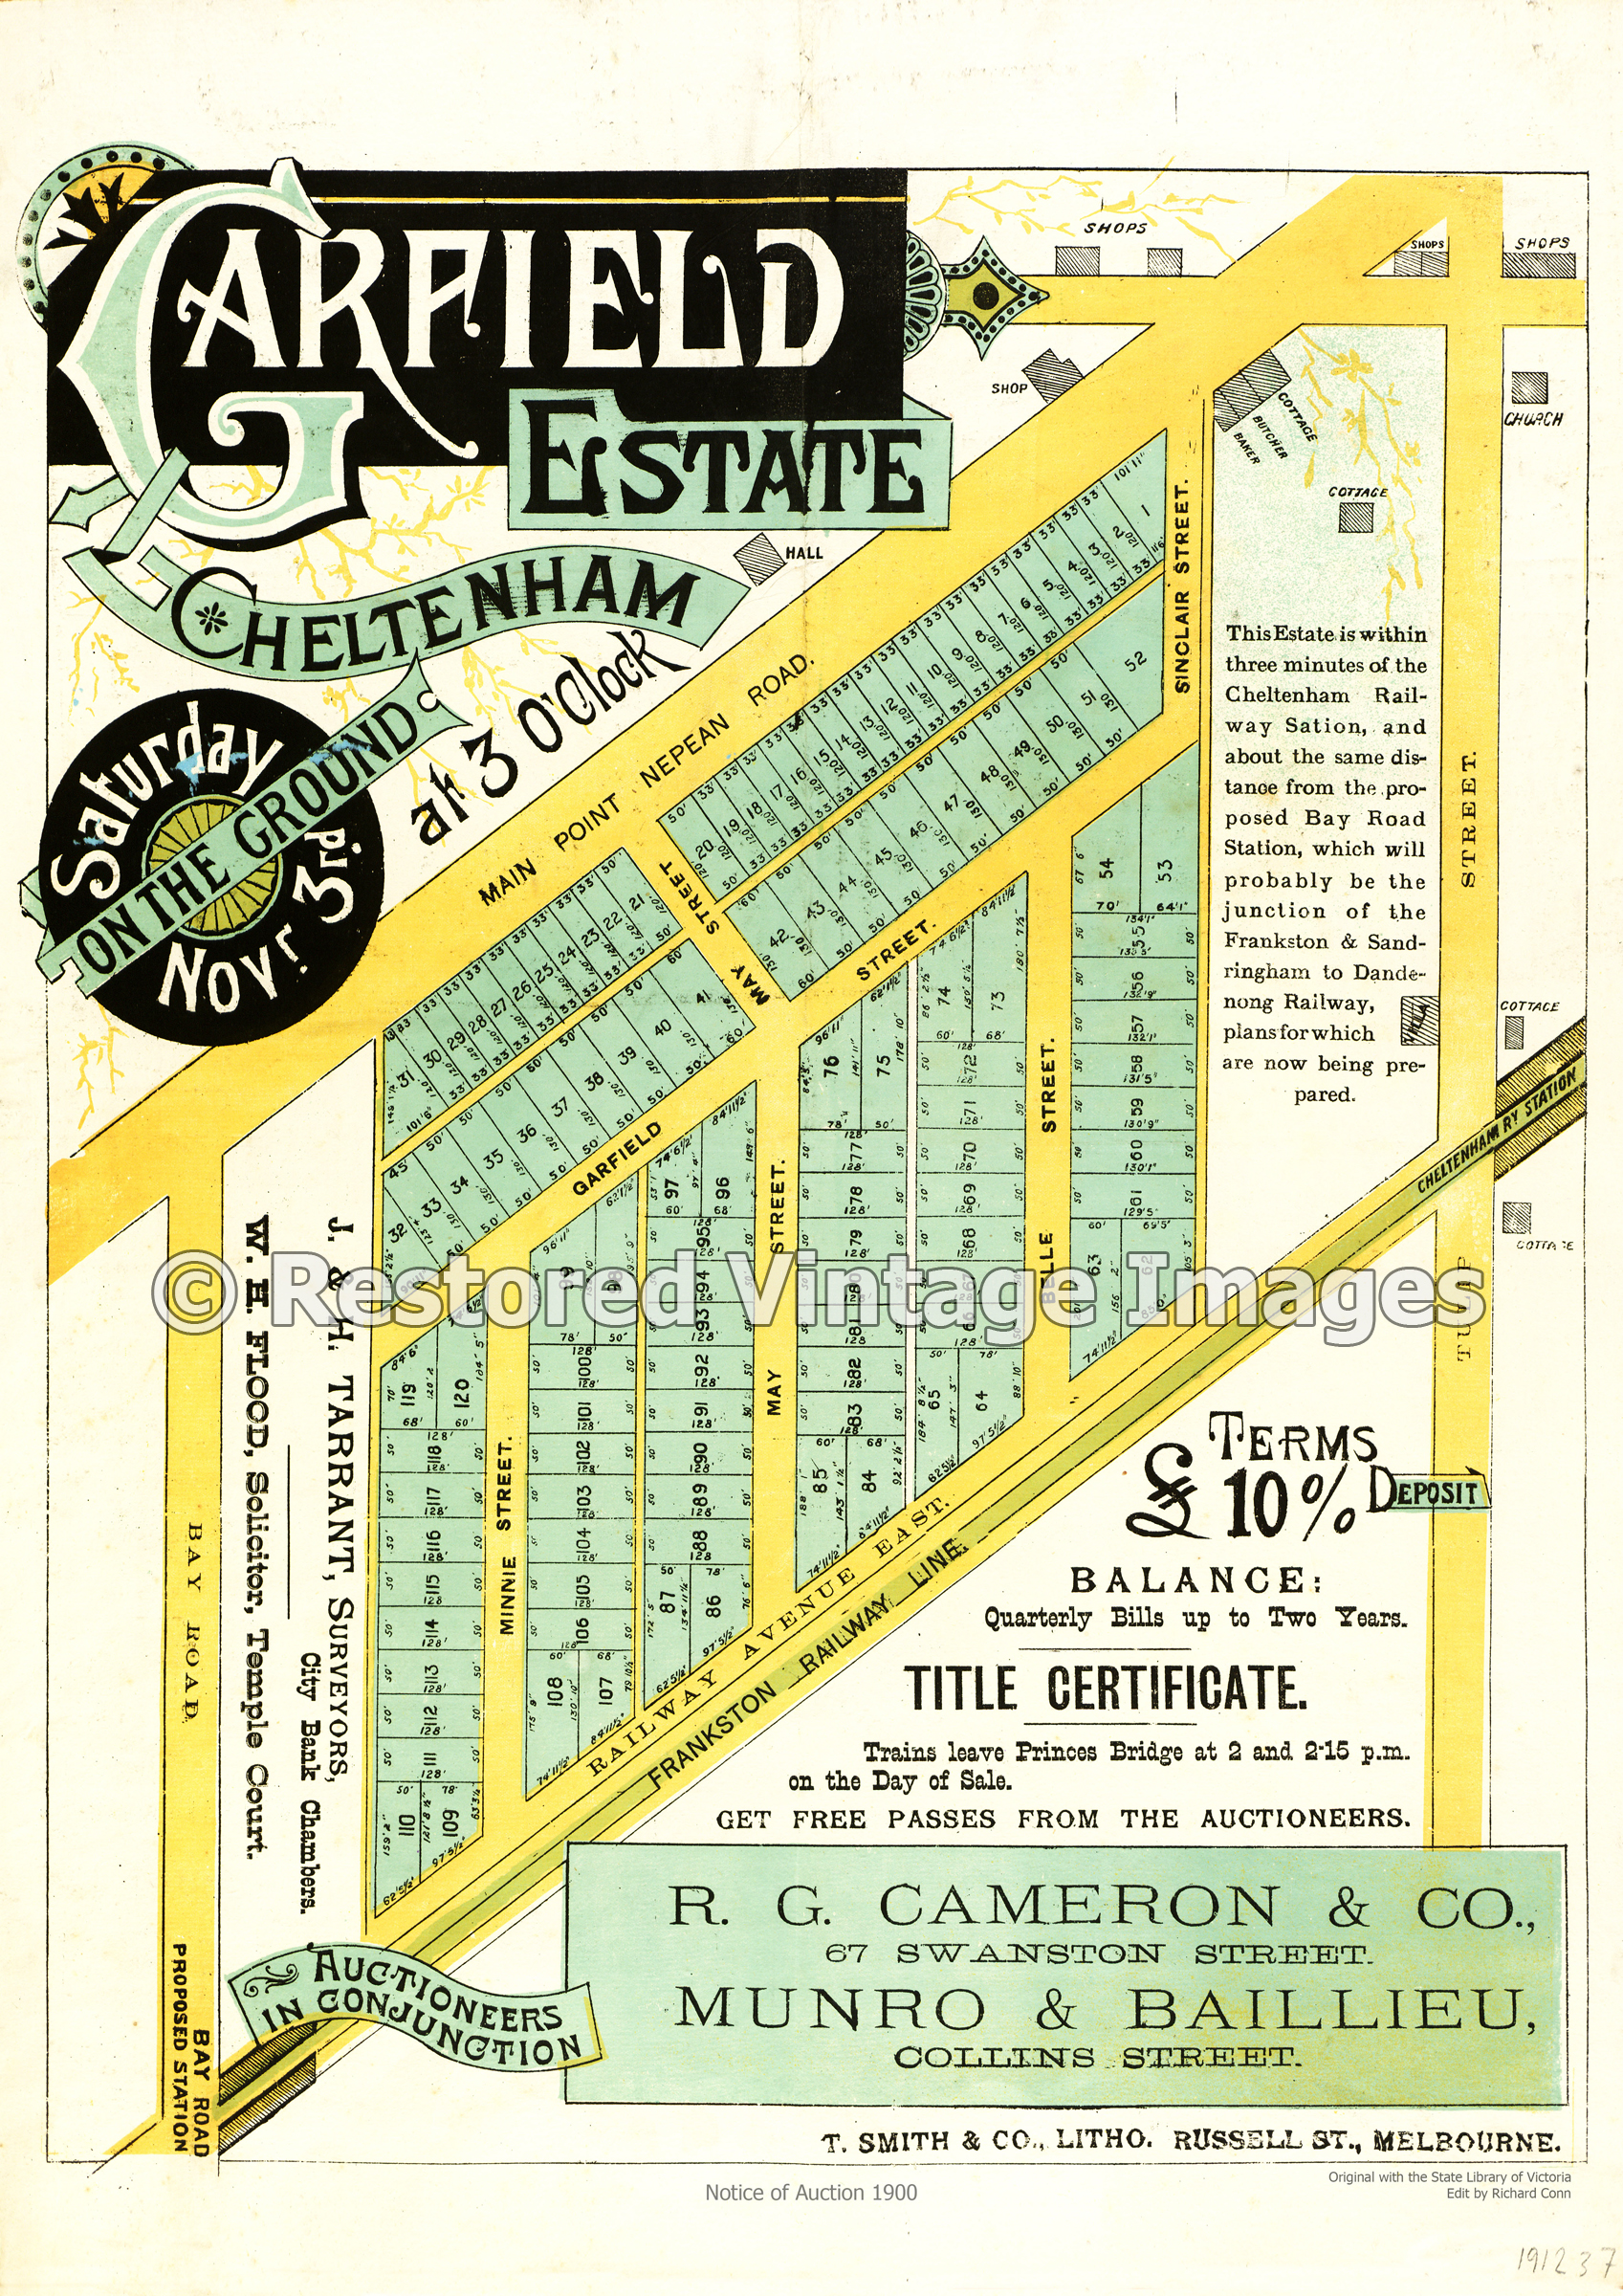 Garfield Estate Cheltenham 1900